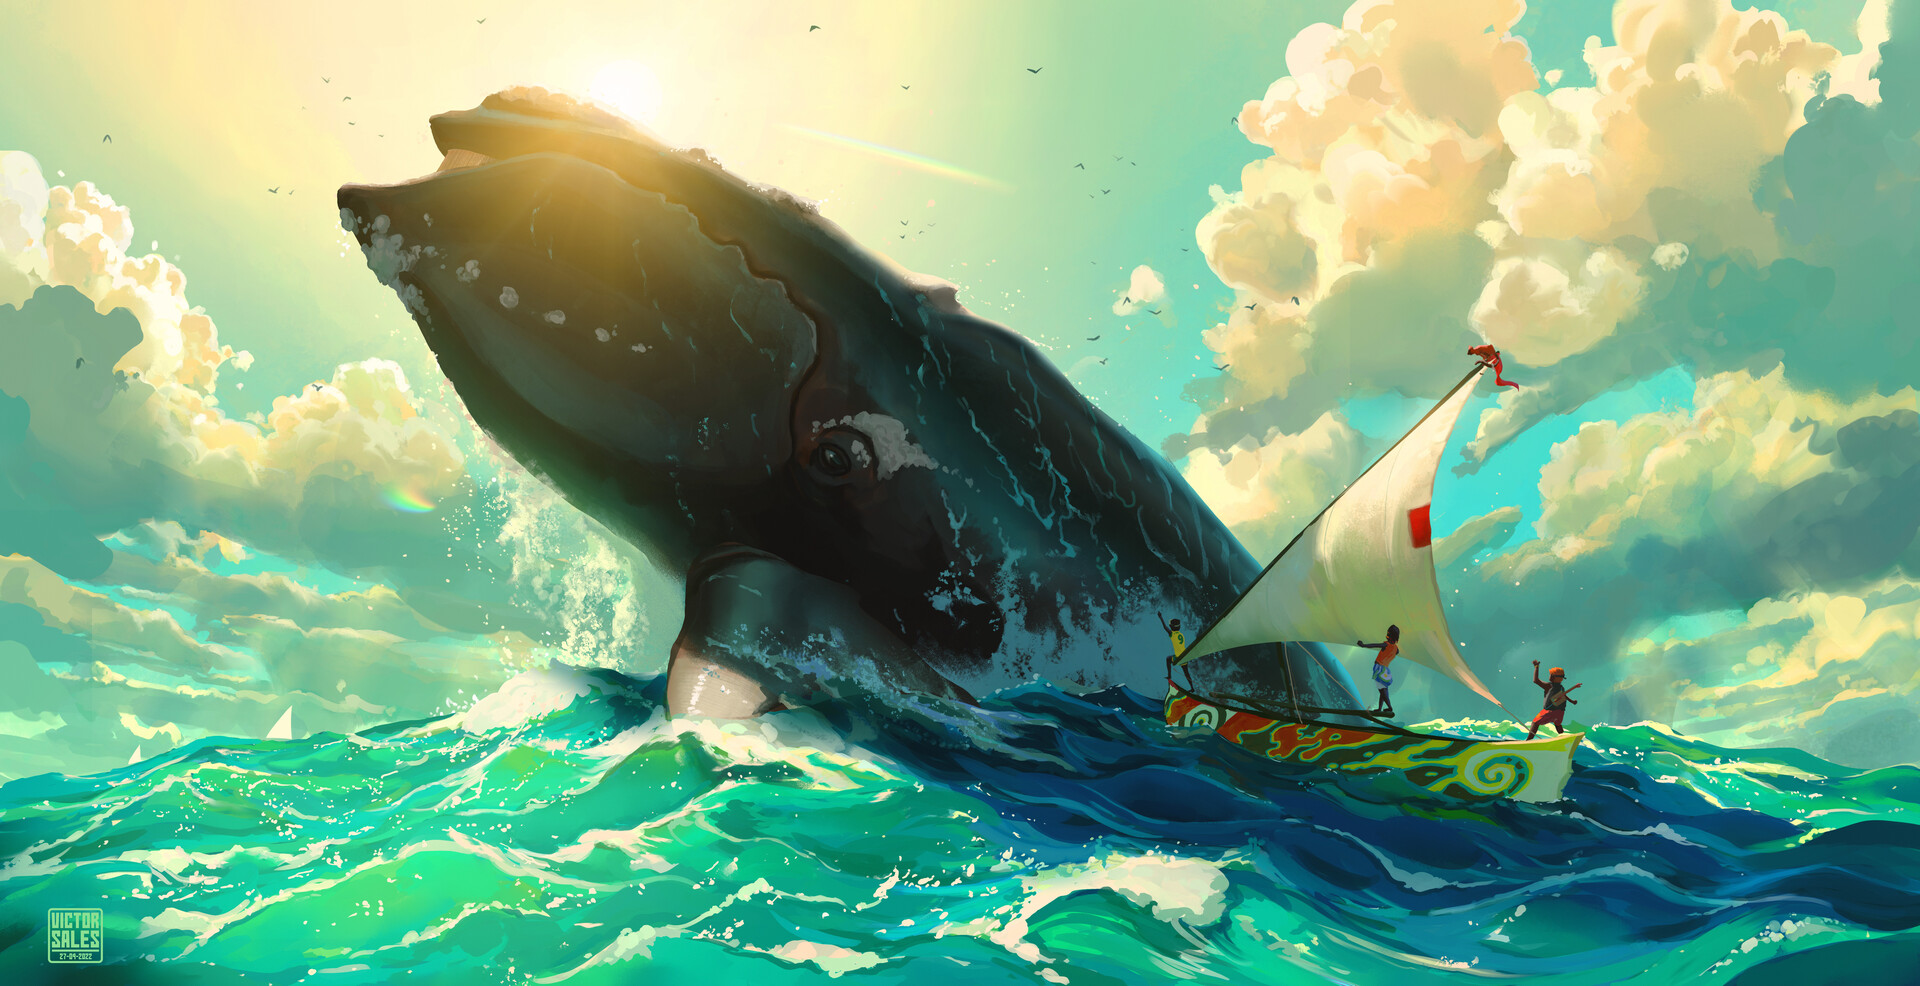 Victor Sales Digital Art Fantasy Art ArtStation Whale Sailing Ship Clouds Water Sky Sunlight Animals 1920x986